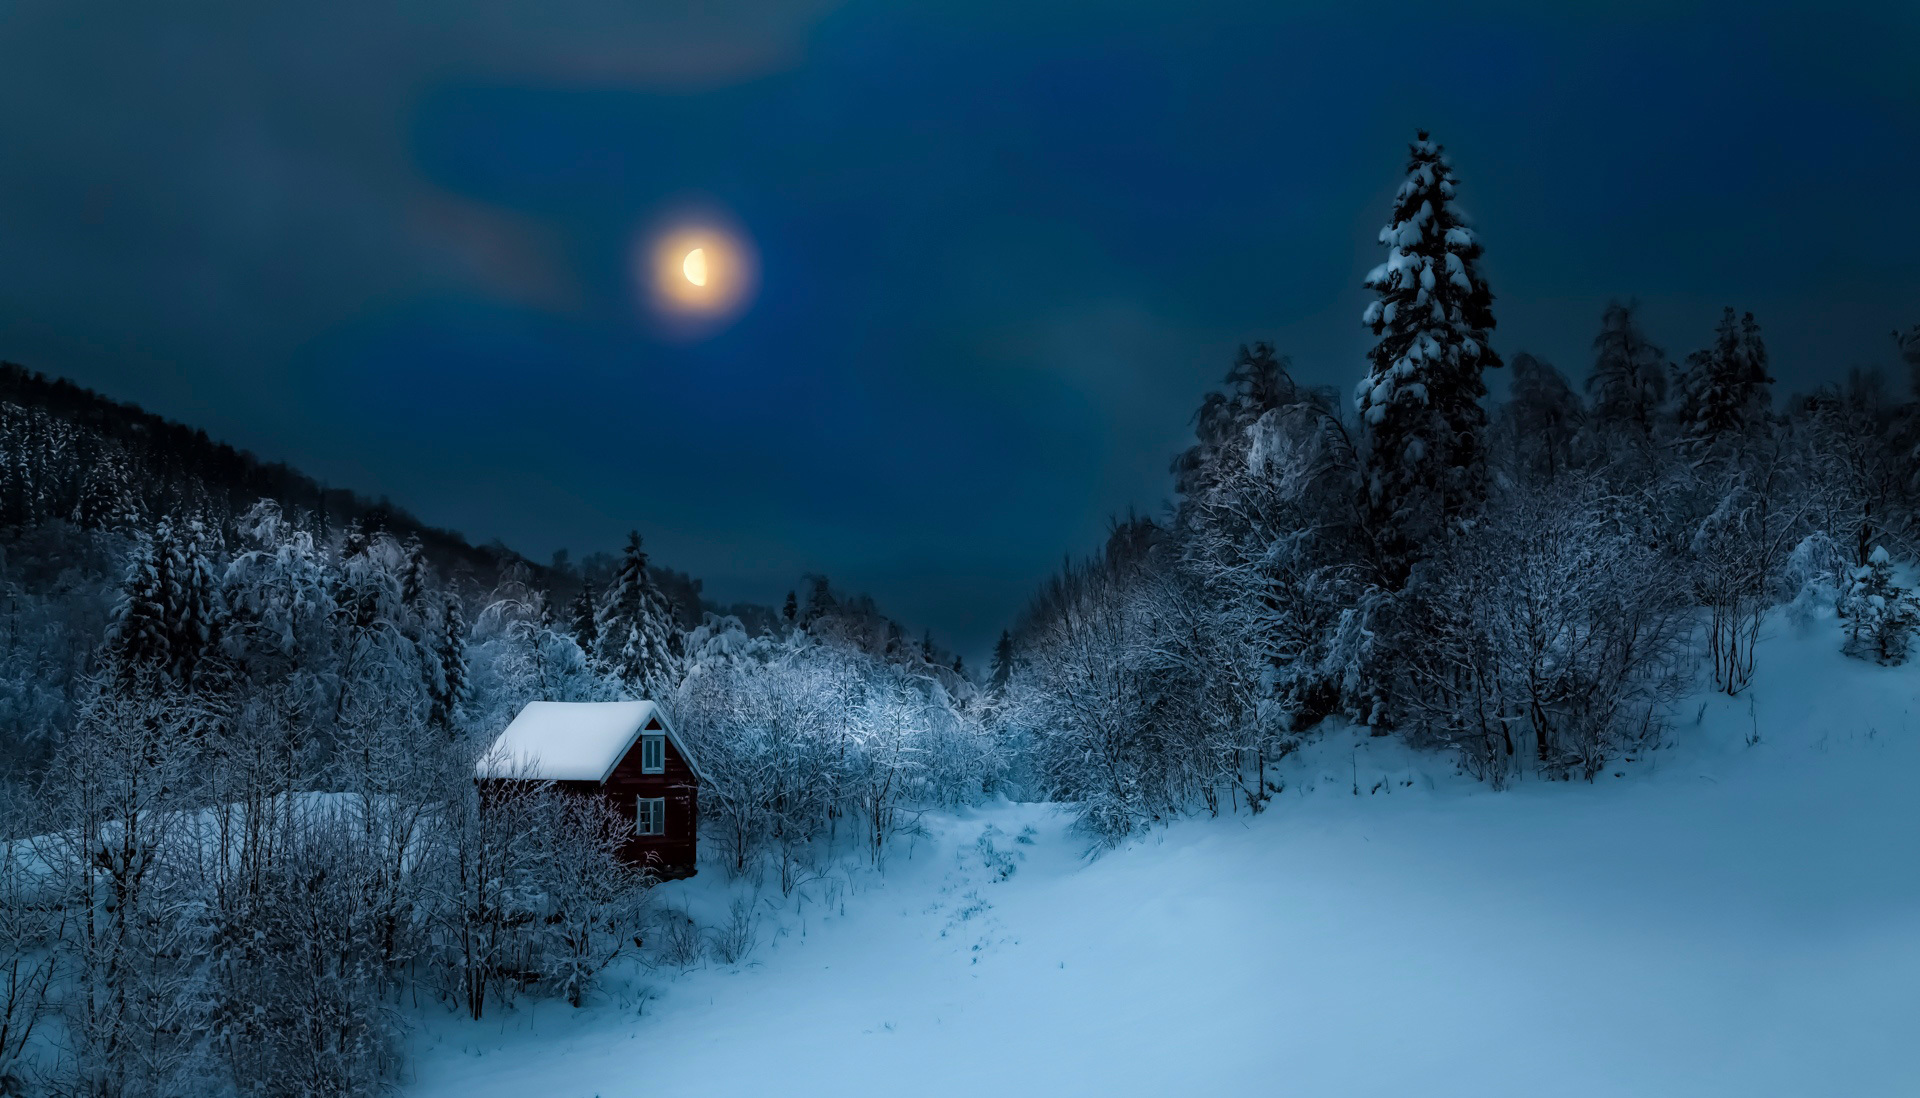 Winter Night HD Wallpaper Background Image 1920x1098 ID677023 Wallpaper Abyss